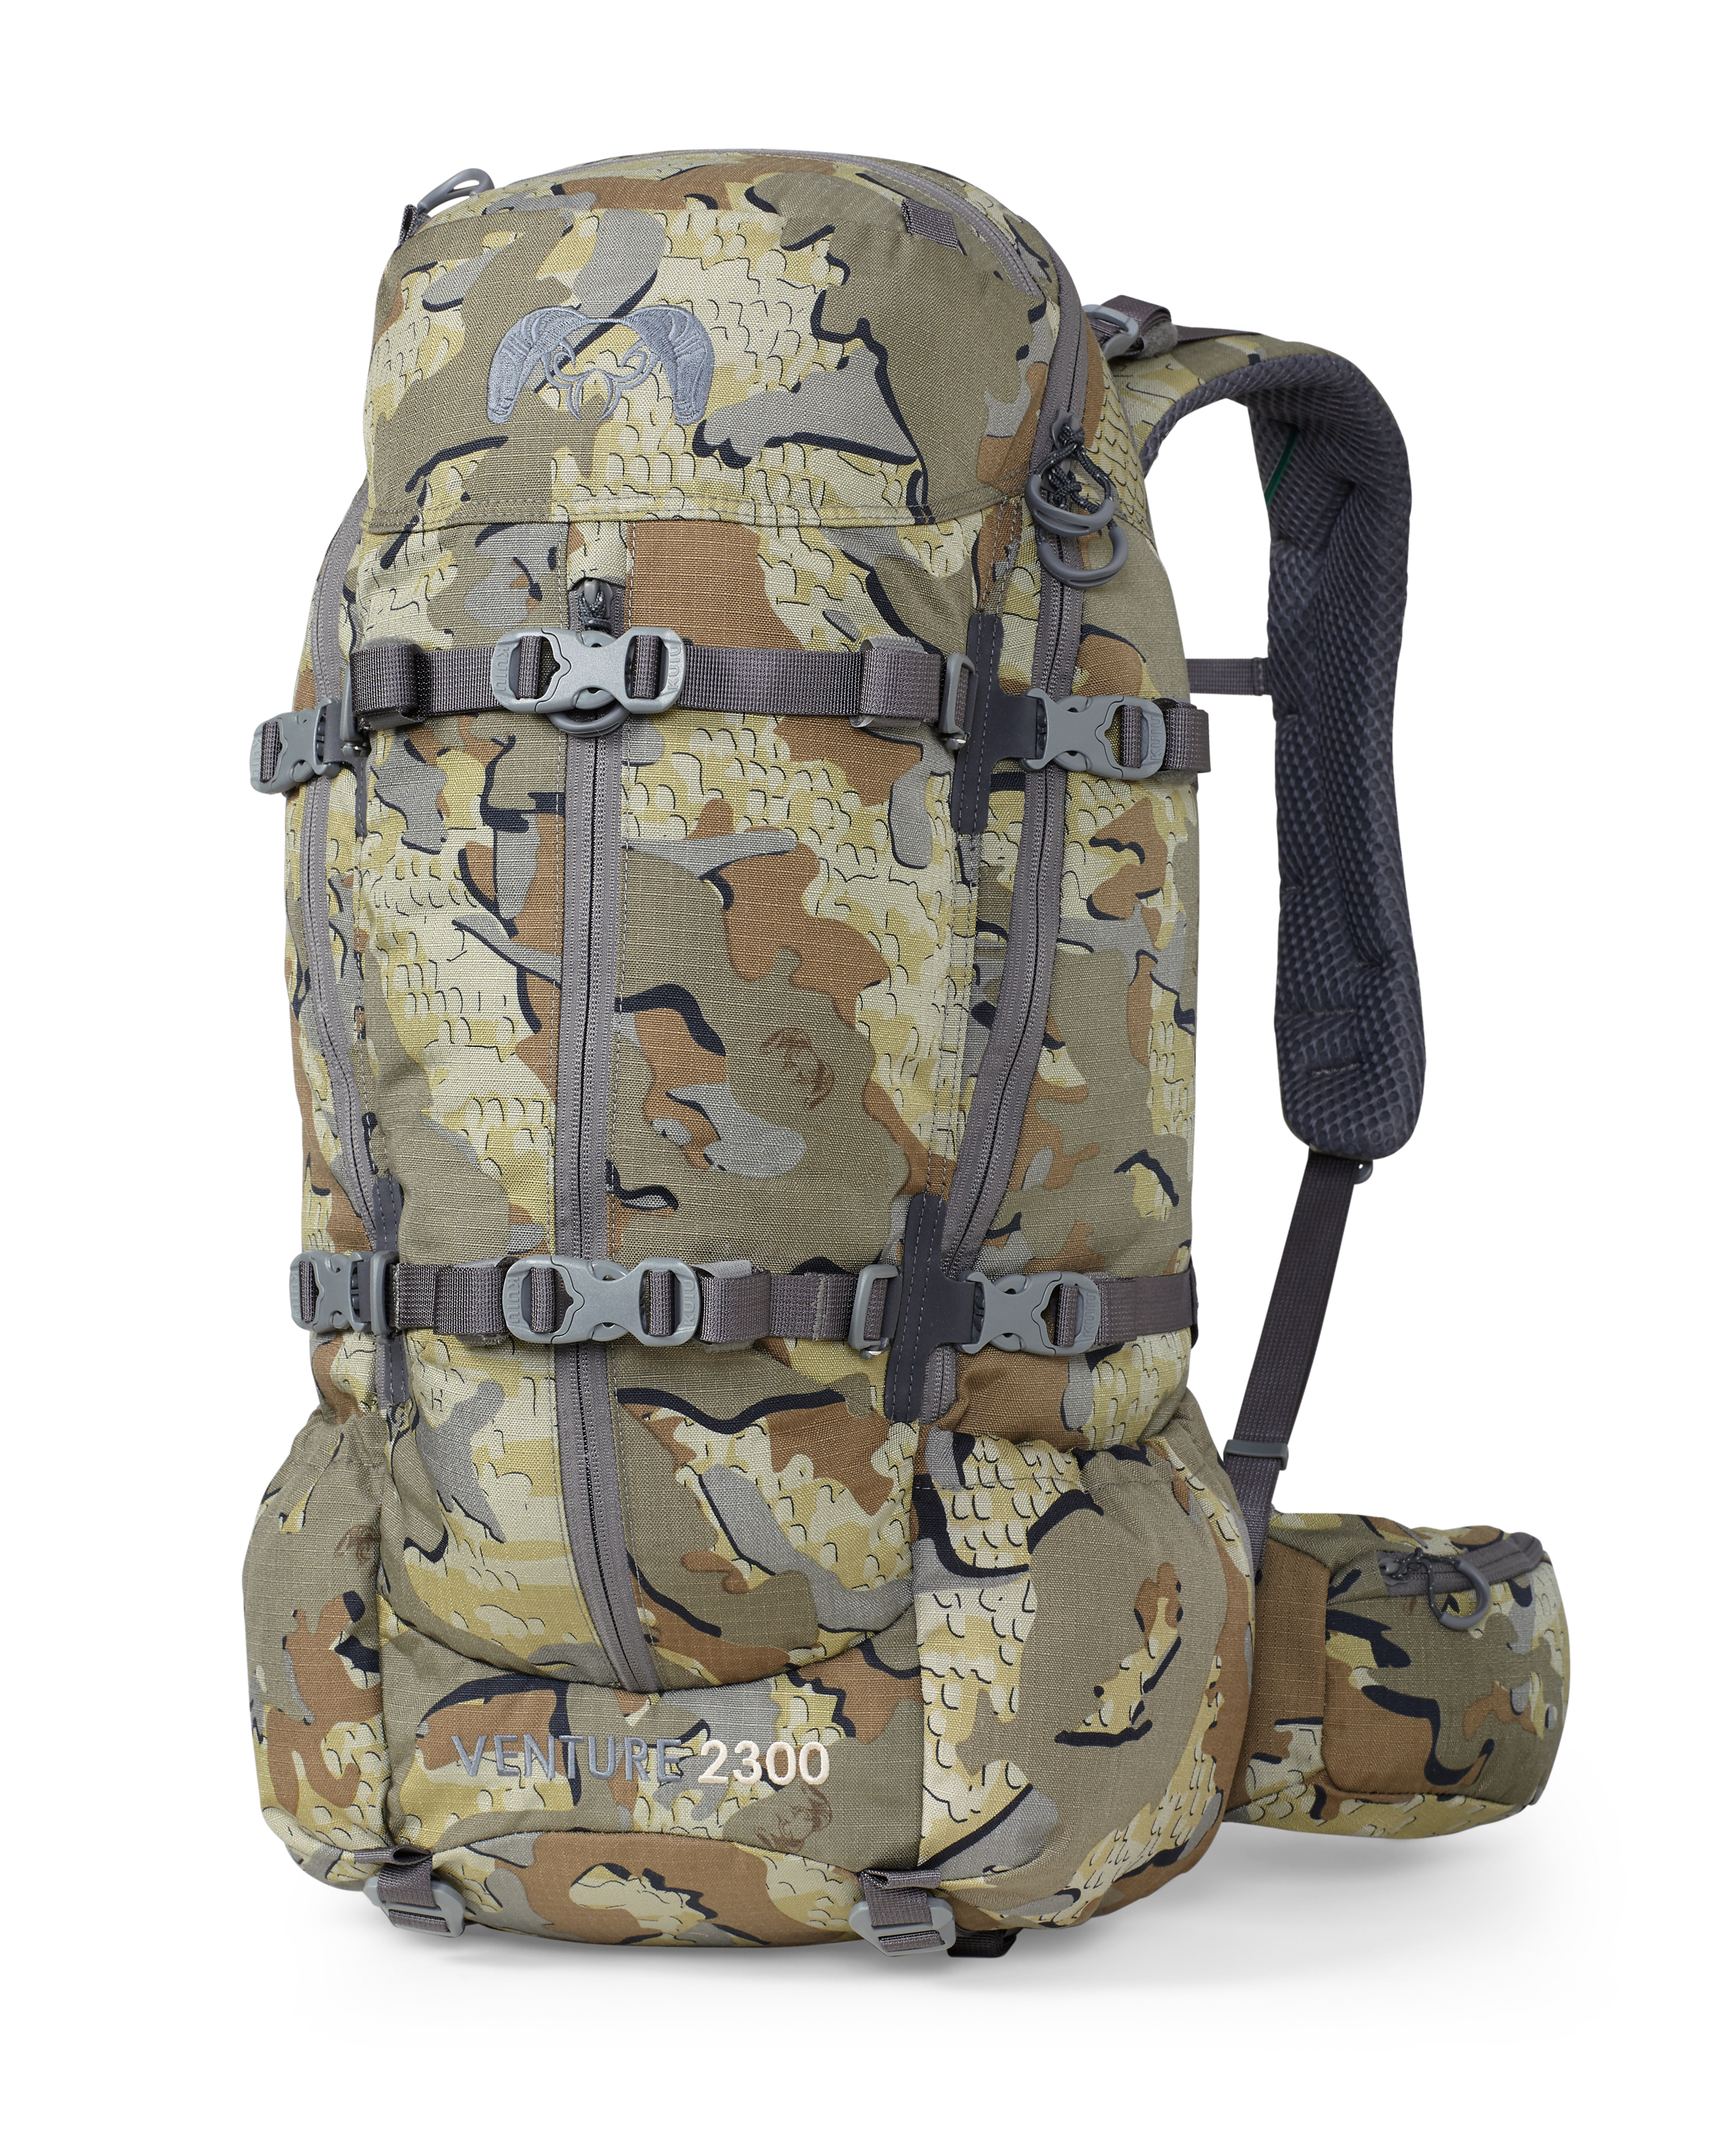 KUIU Venture 2300 Day Bag Pack in Valo | Size Medium Hunting Pack